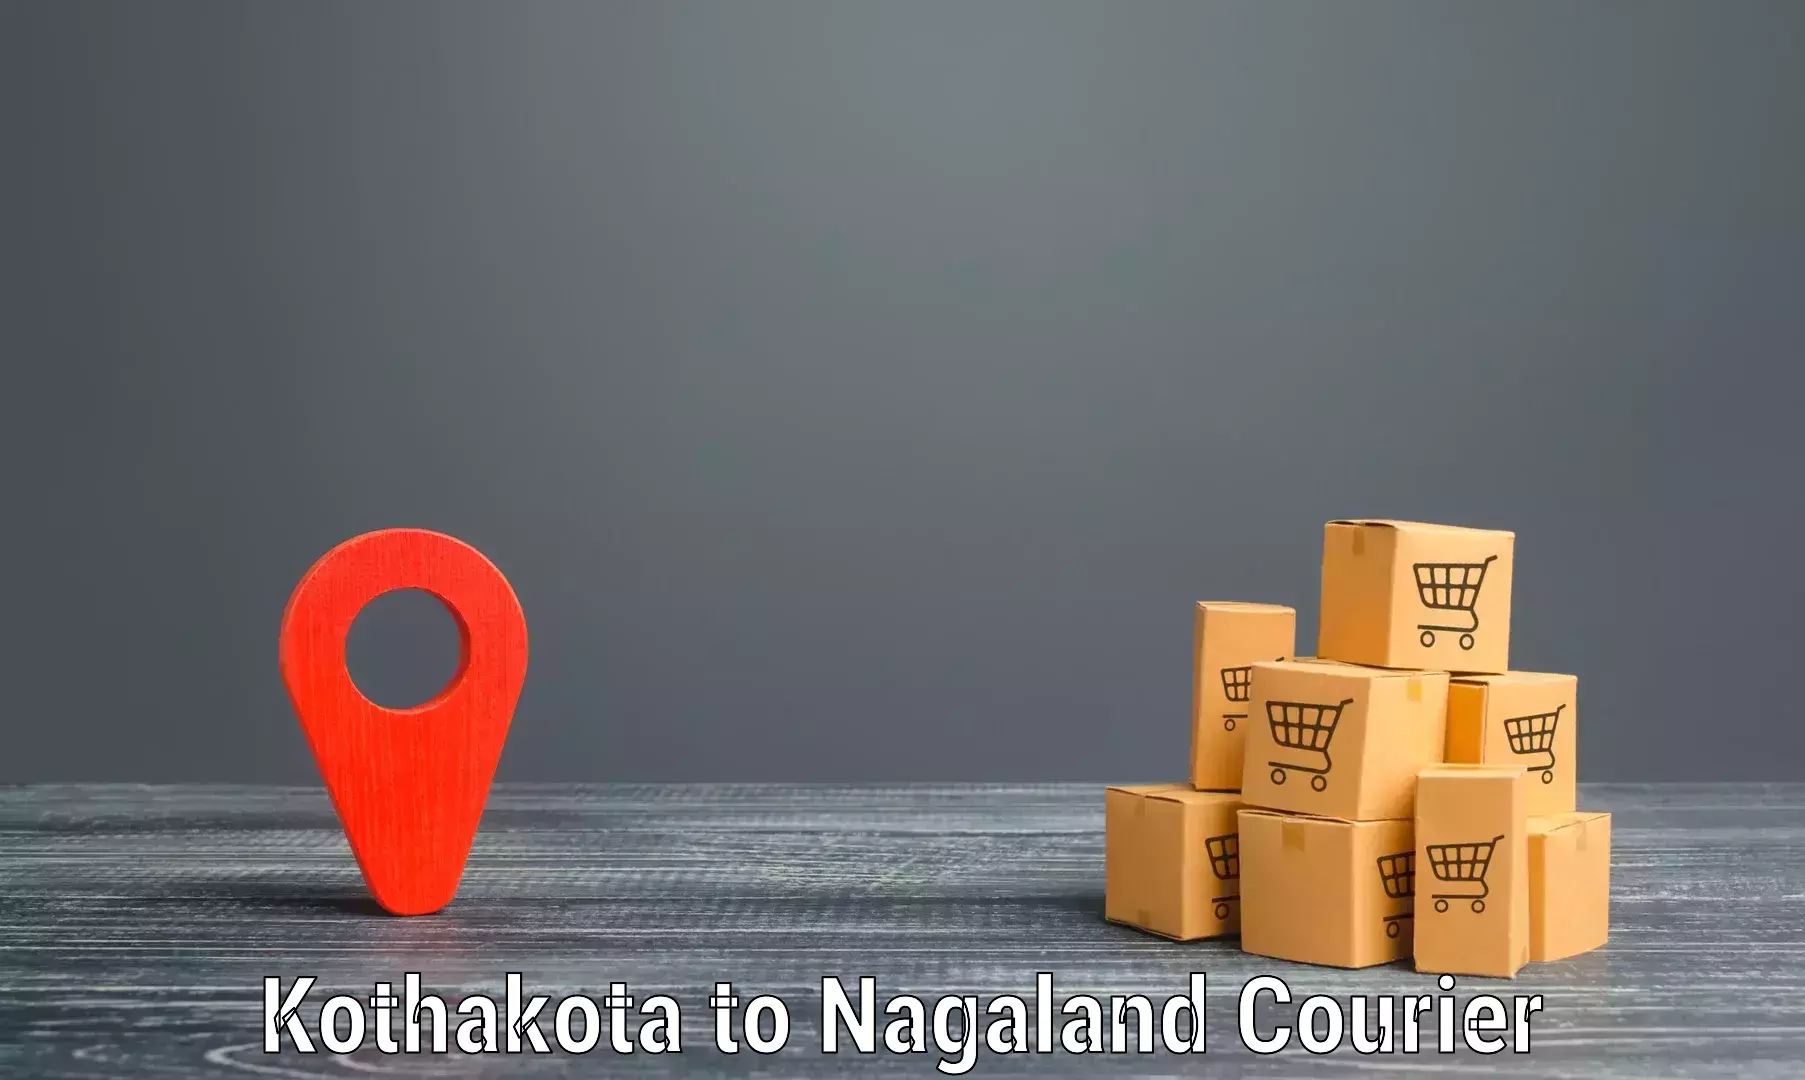 Multi-national courier services Kothakota to Nagaland